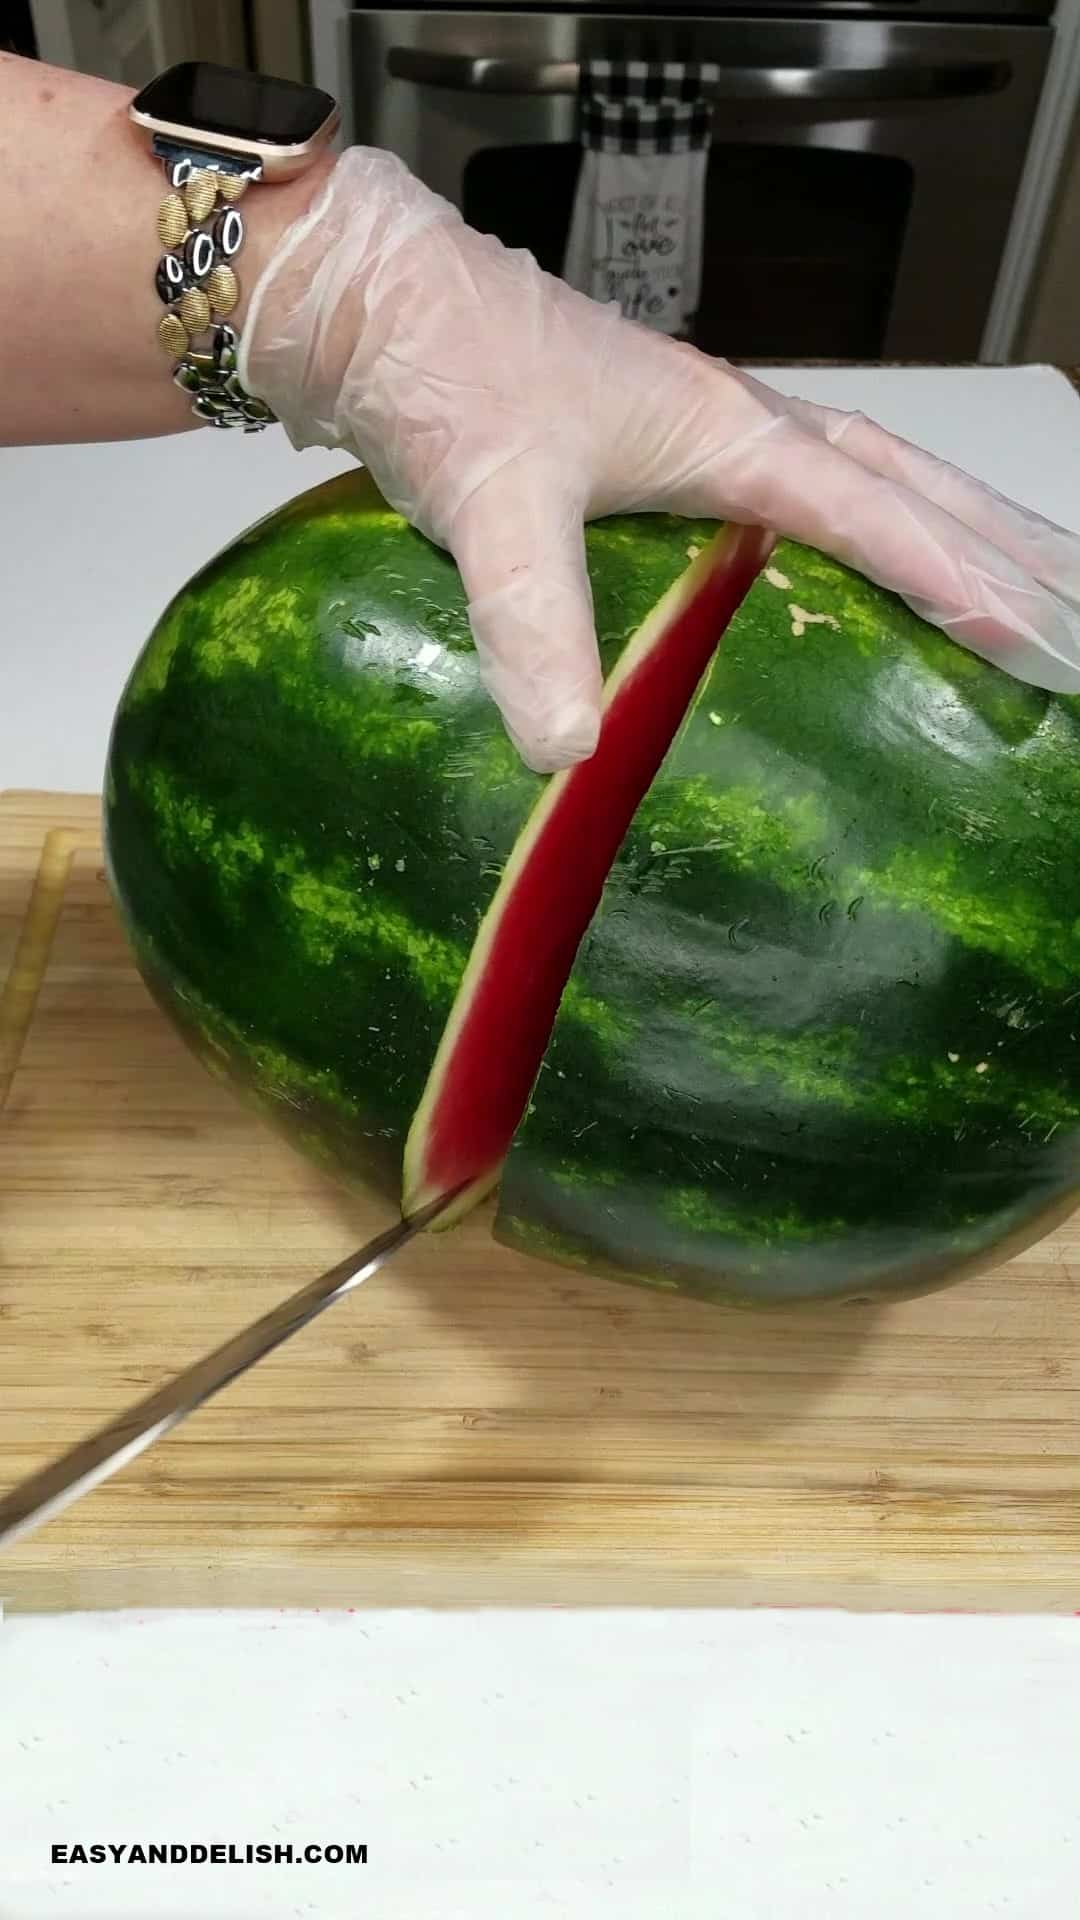 a melon cut in half.